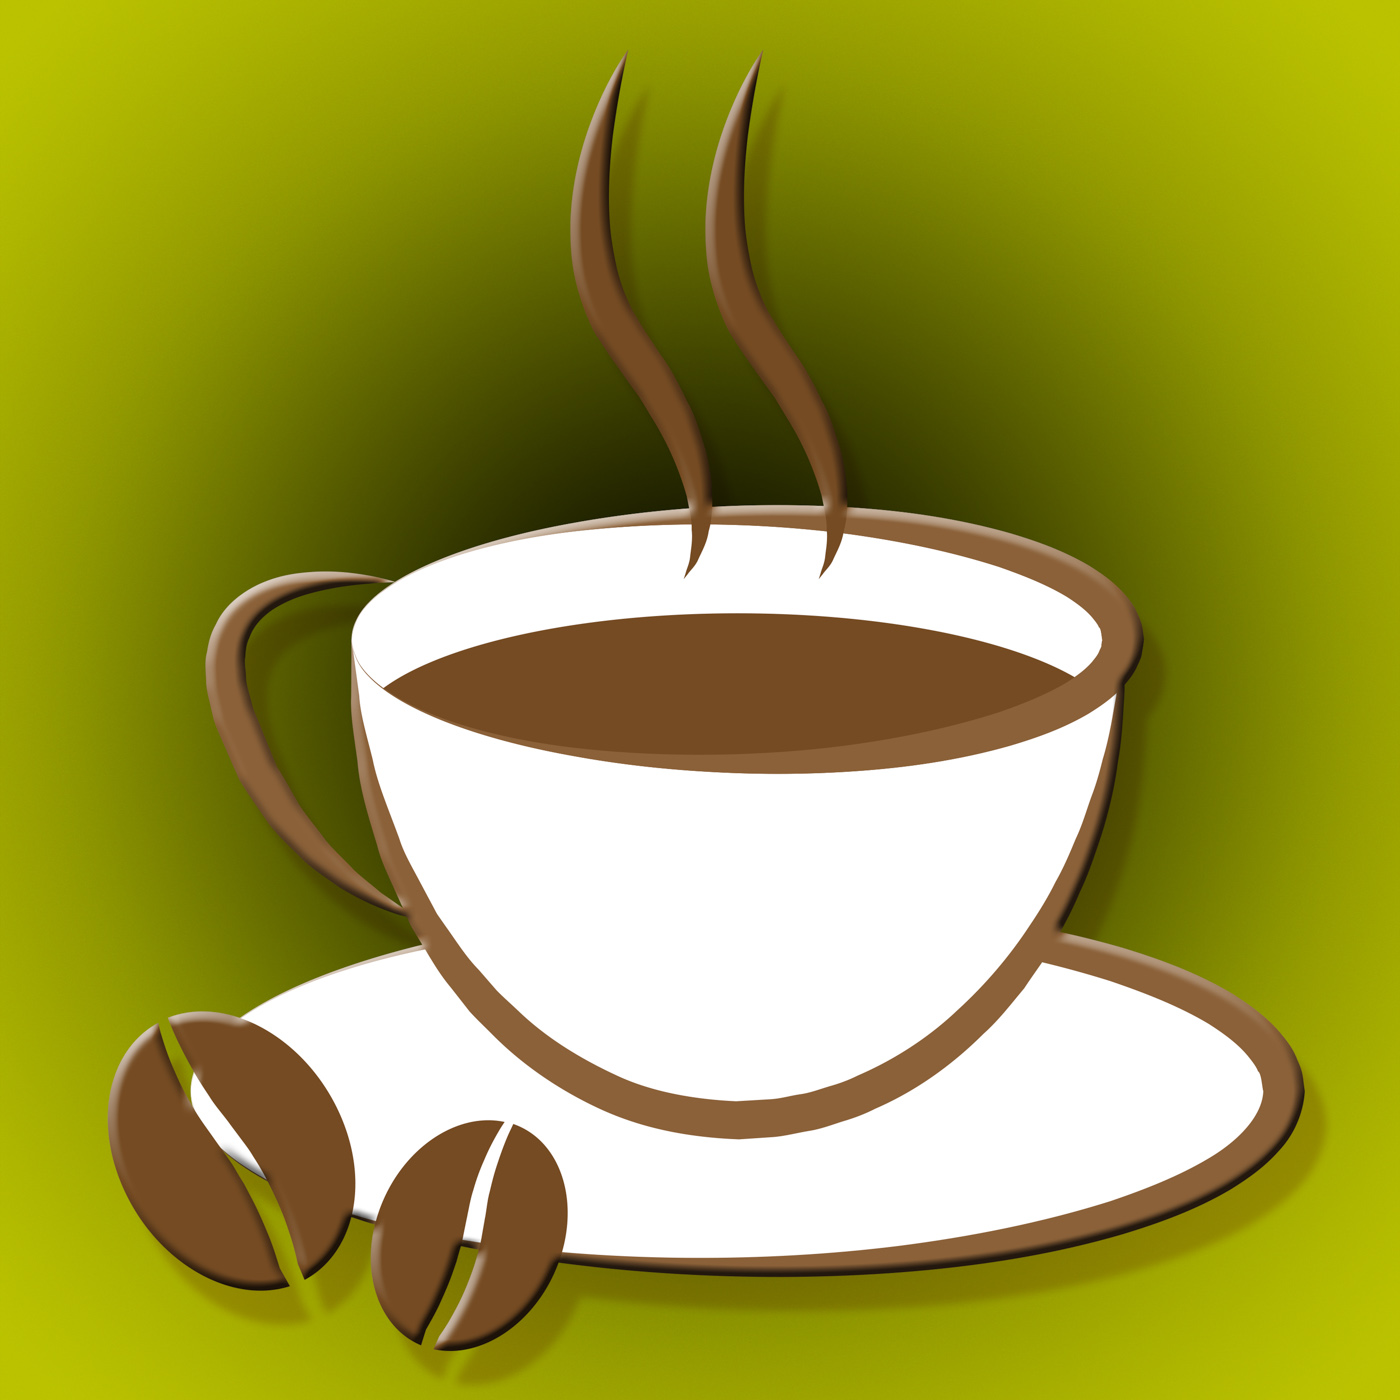 Coffee cup indicates caffeine drink and coffeecup photo